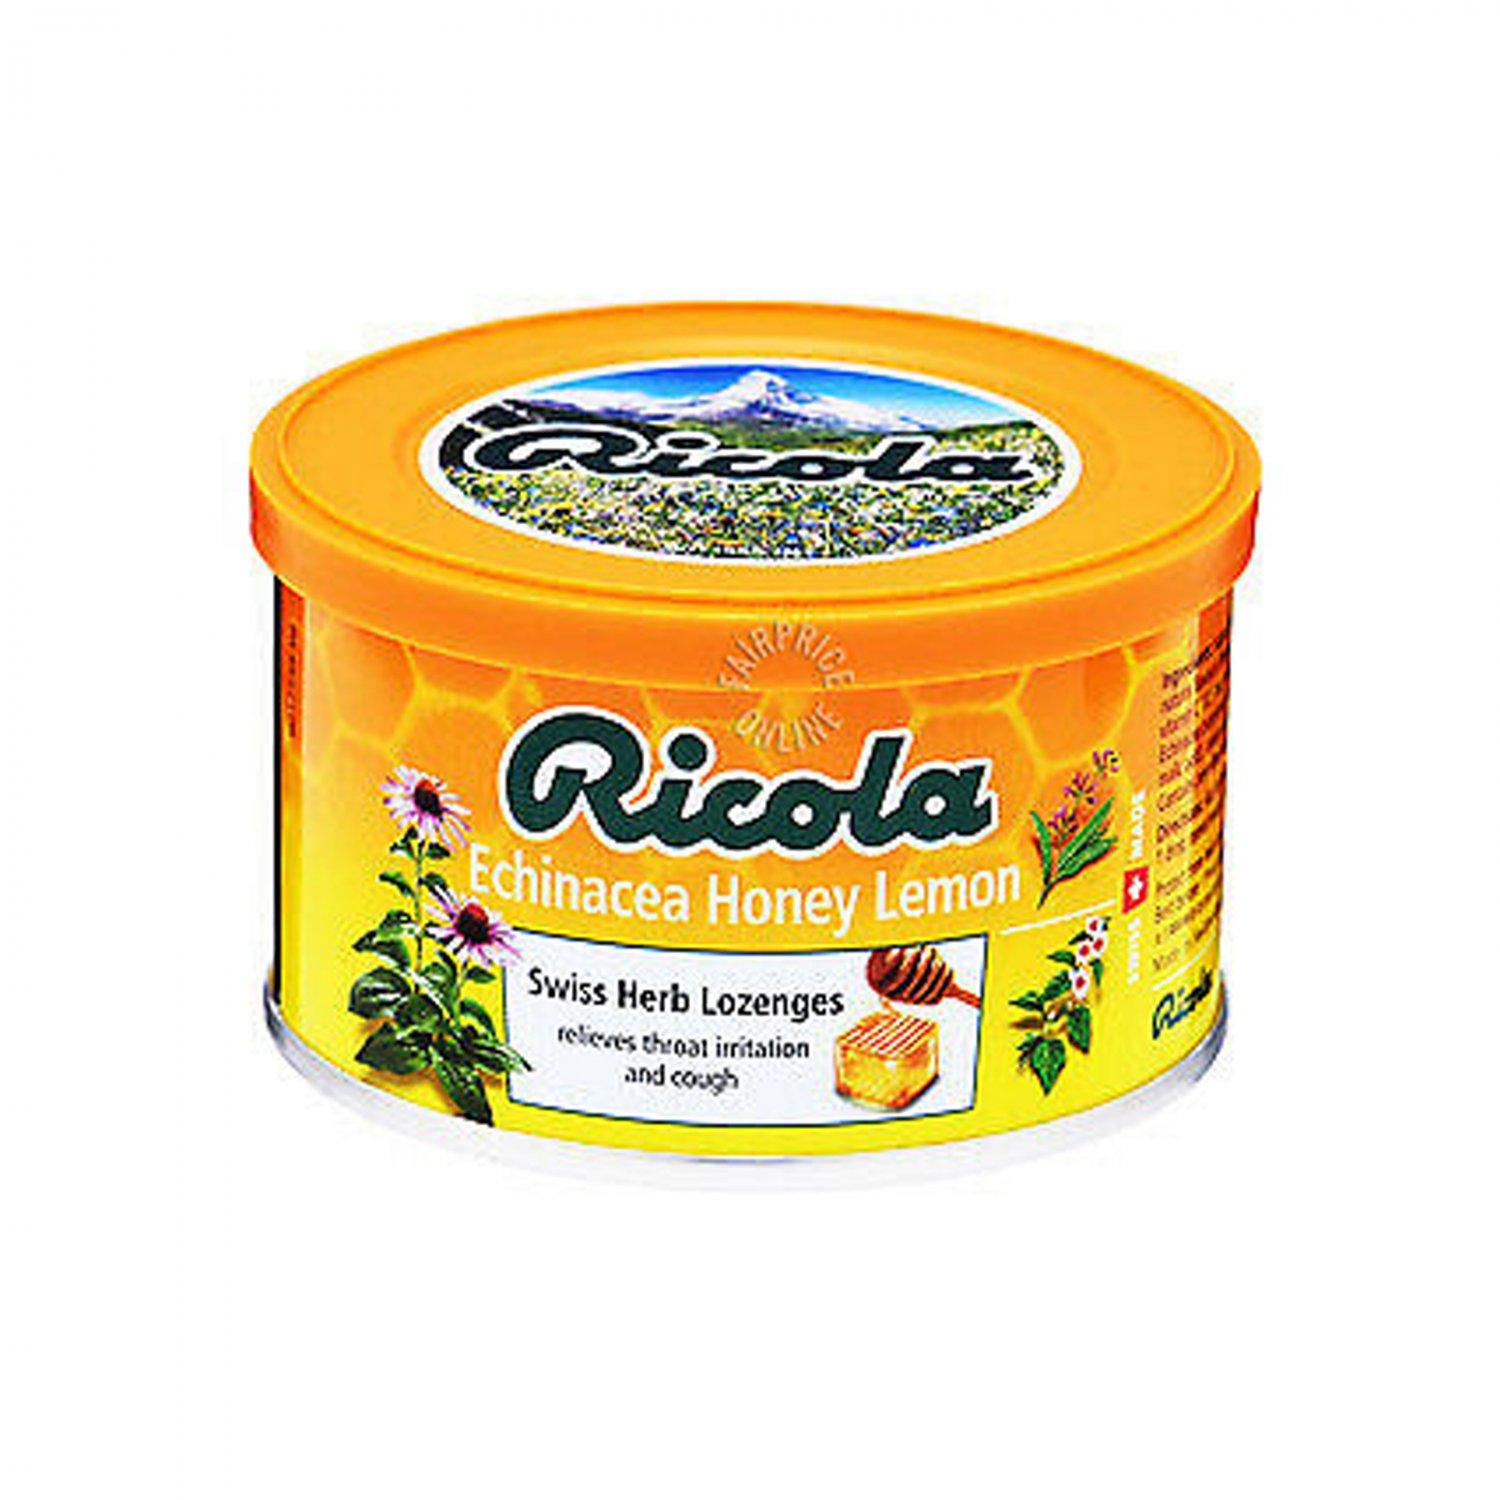 Ricola Swiss Herb Lozenges Sugar free Echinacea Honey Lemon Drops Candy 100g for Cold Flu & Cough